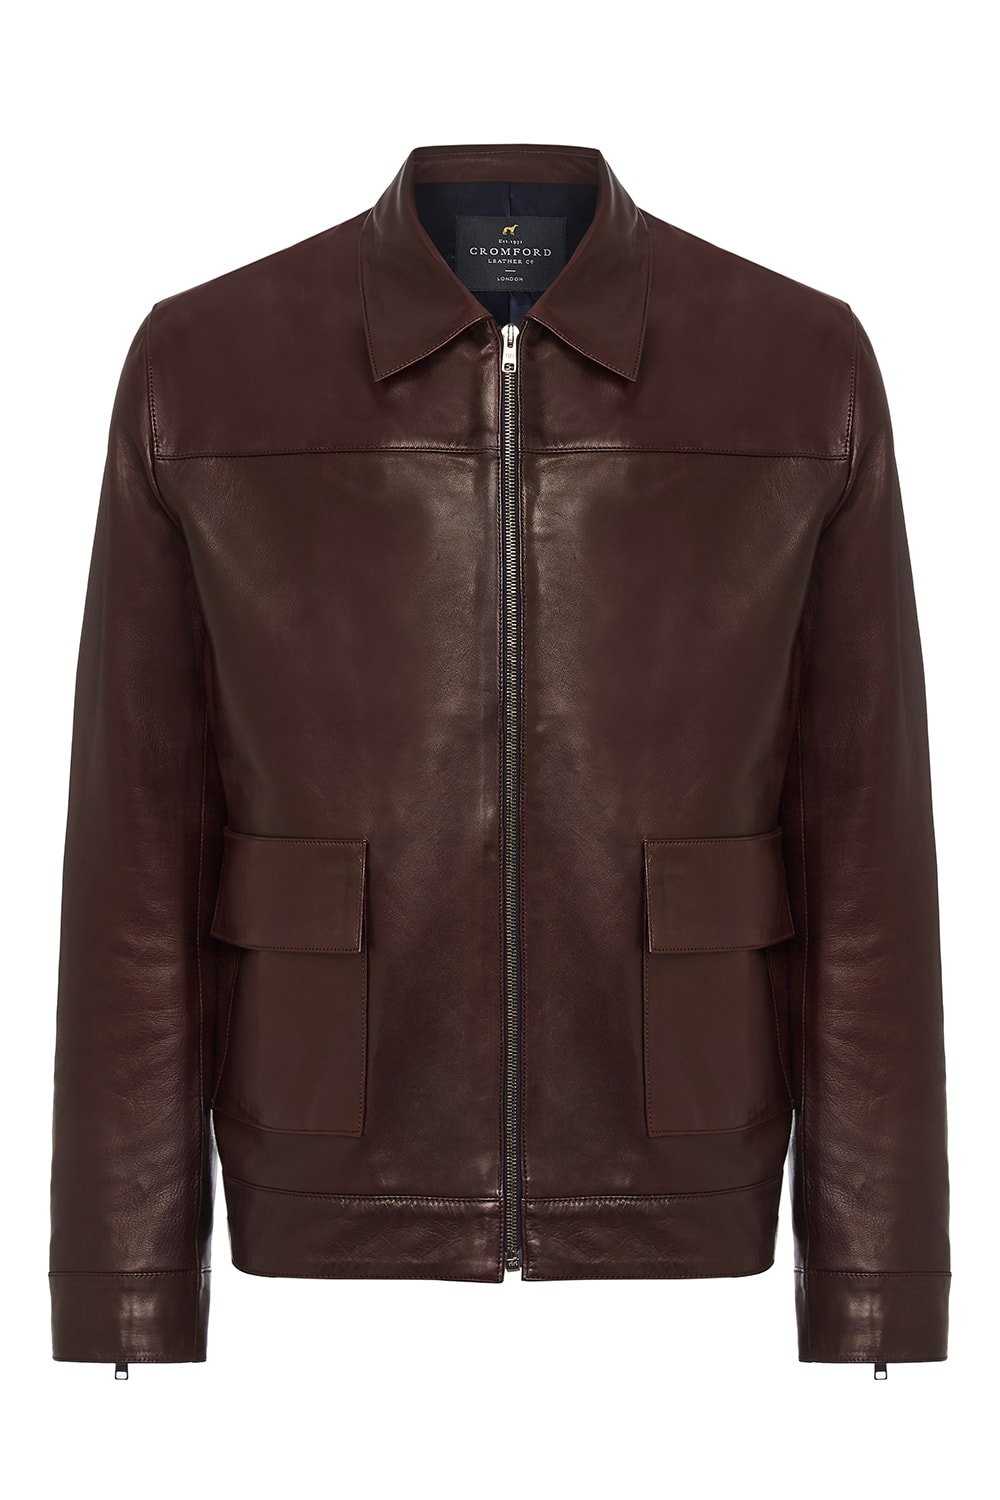 Murphy - Cromford Leather